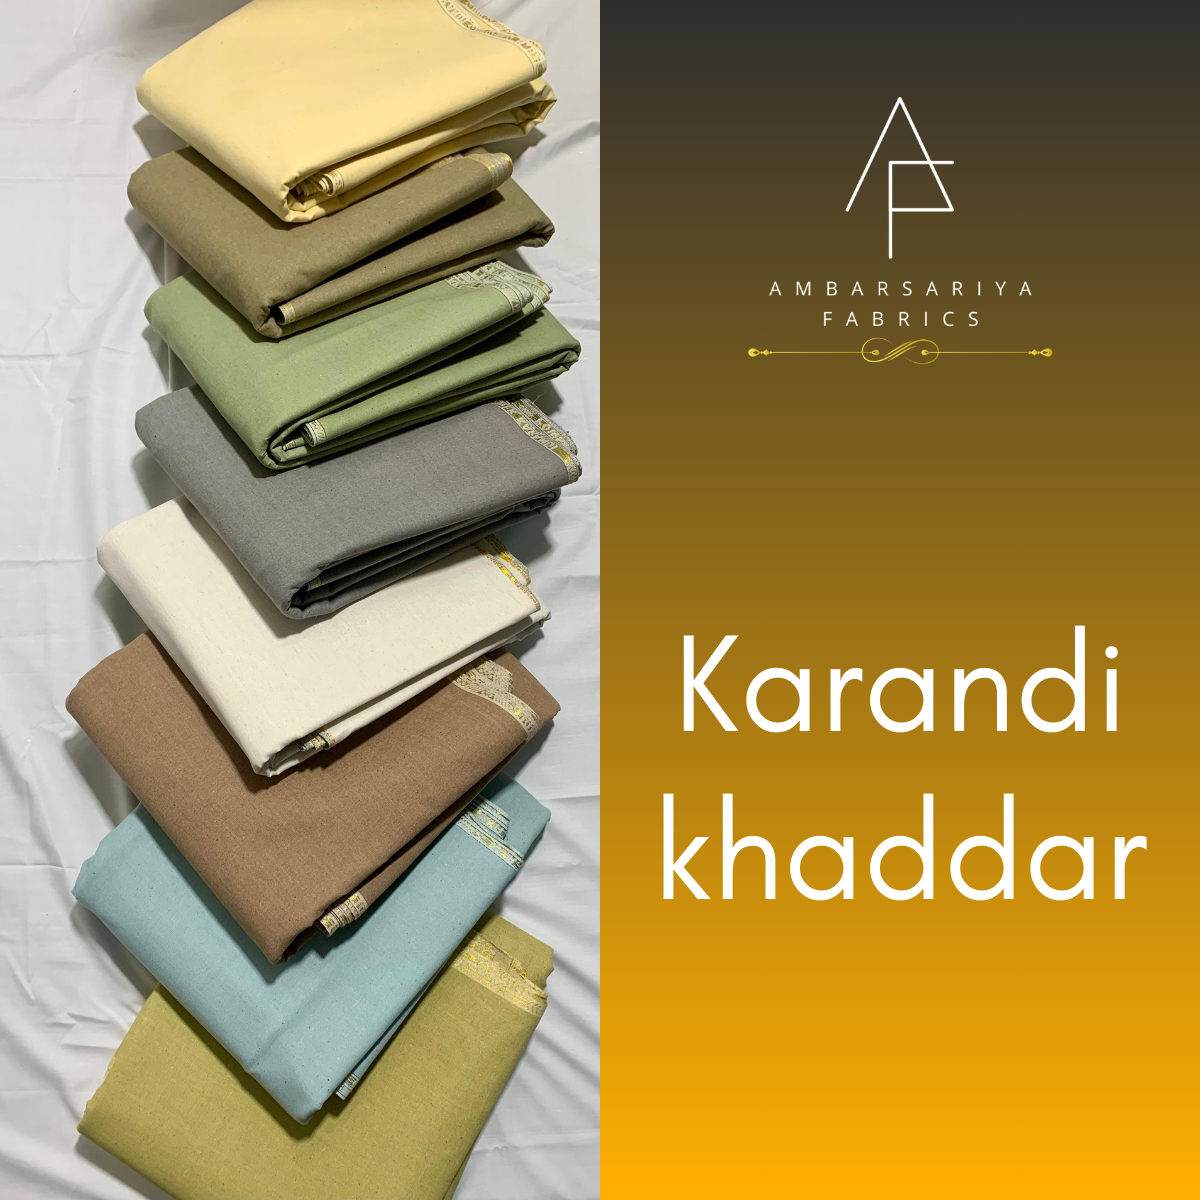 Ambarsariya’s Karandi Khaddar